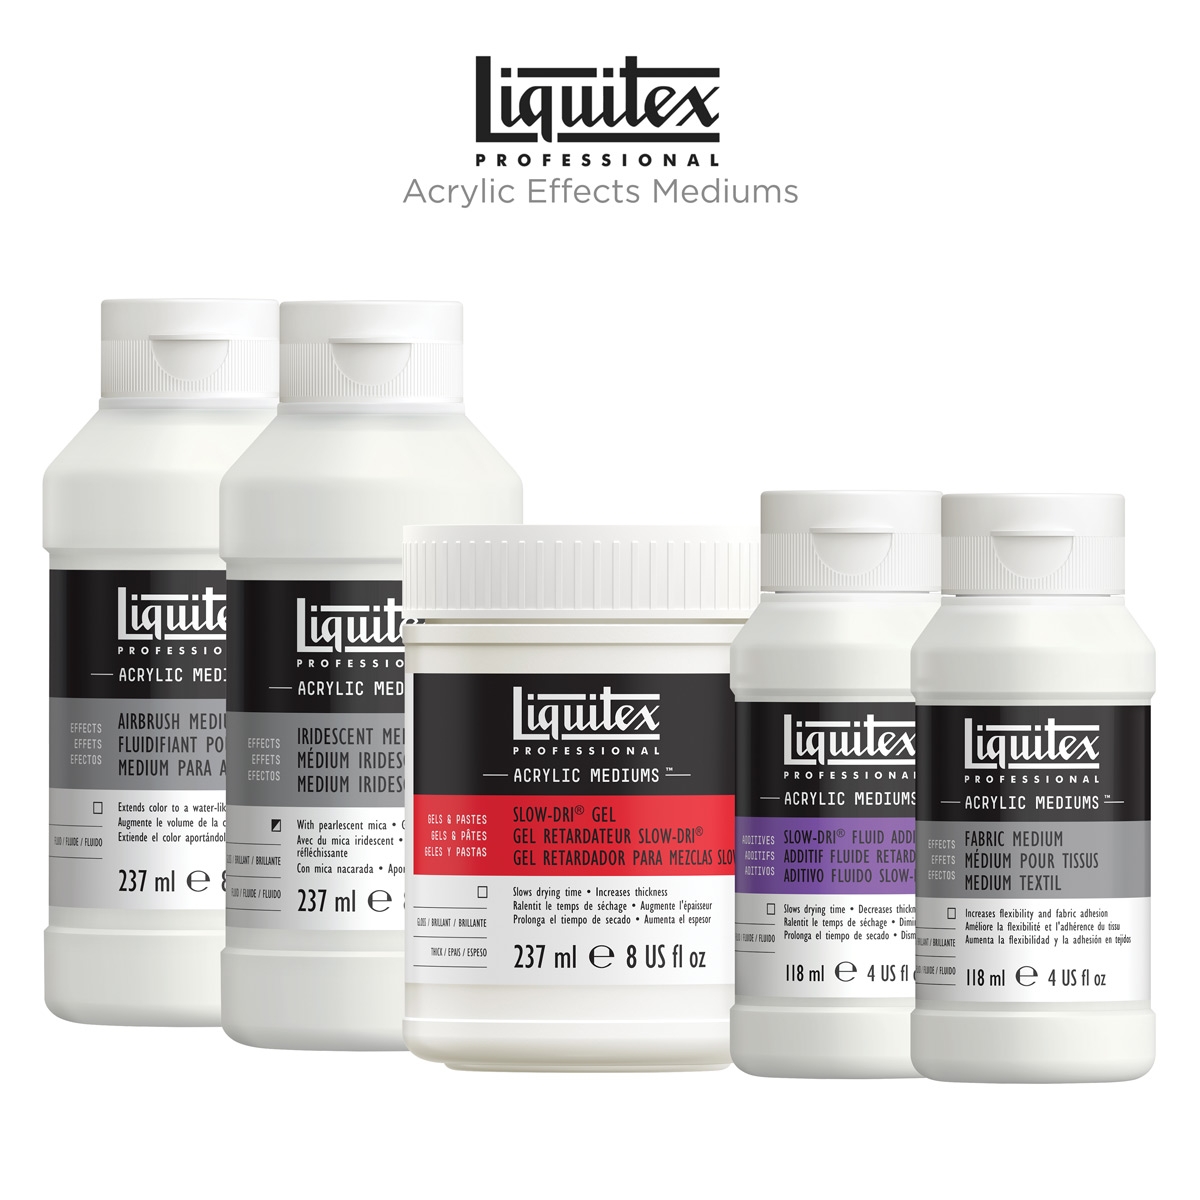 Liquitex Basics Acrylic Value Sets